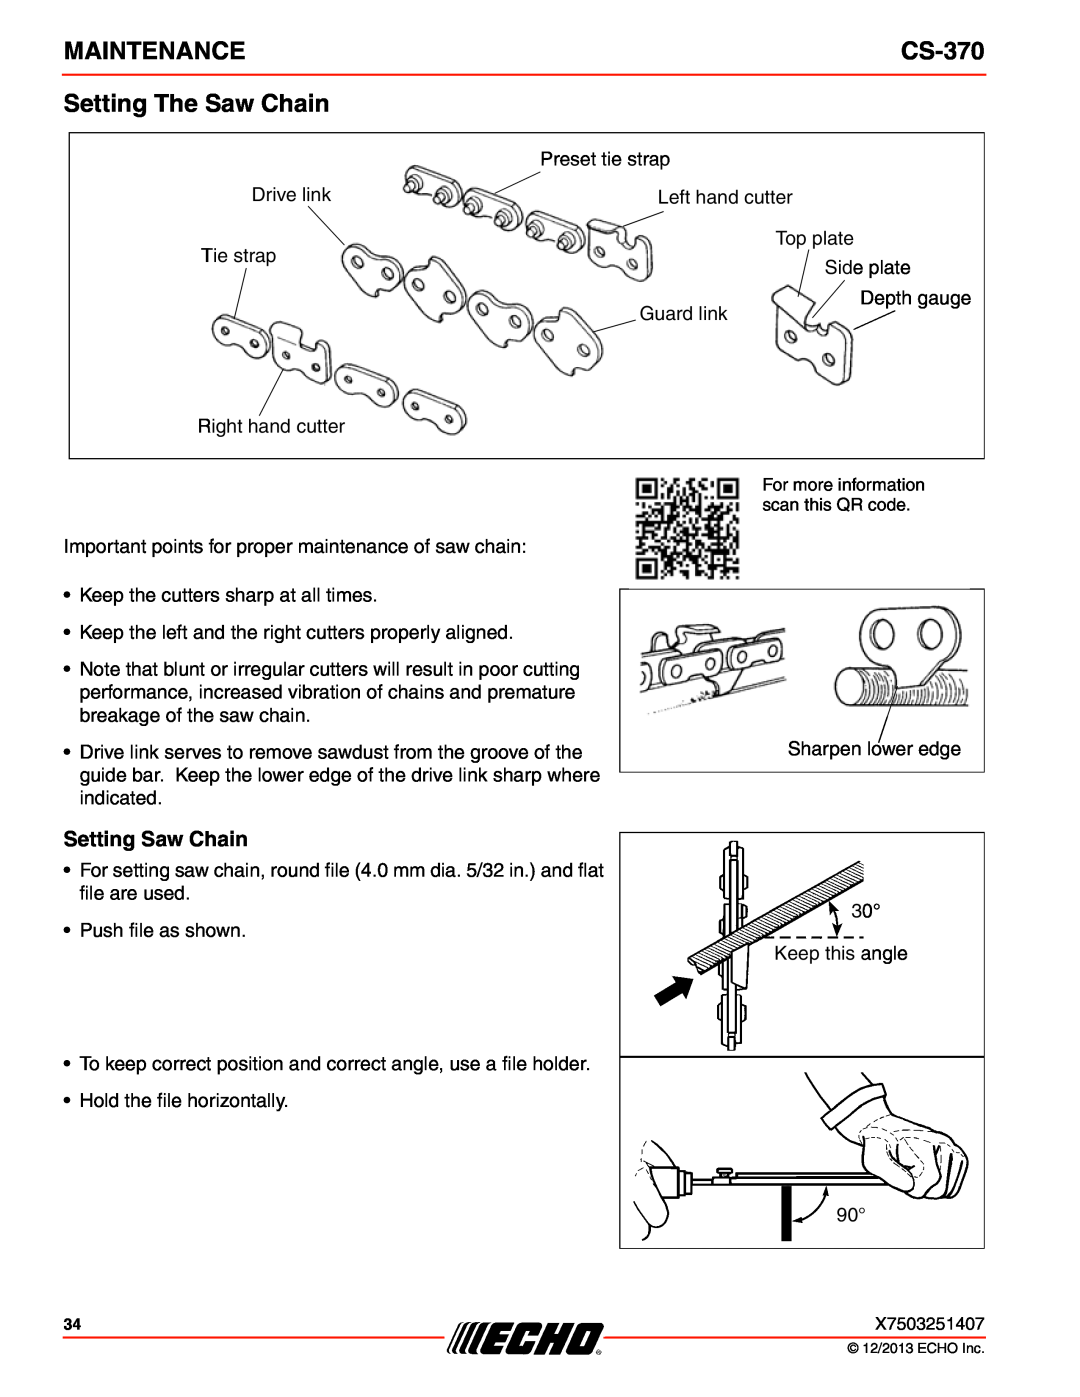 Echo CS-370 instruction manual Setting The Saw Chain, Setting Saw Chain, Maintenance 